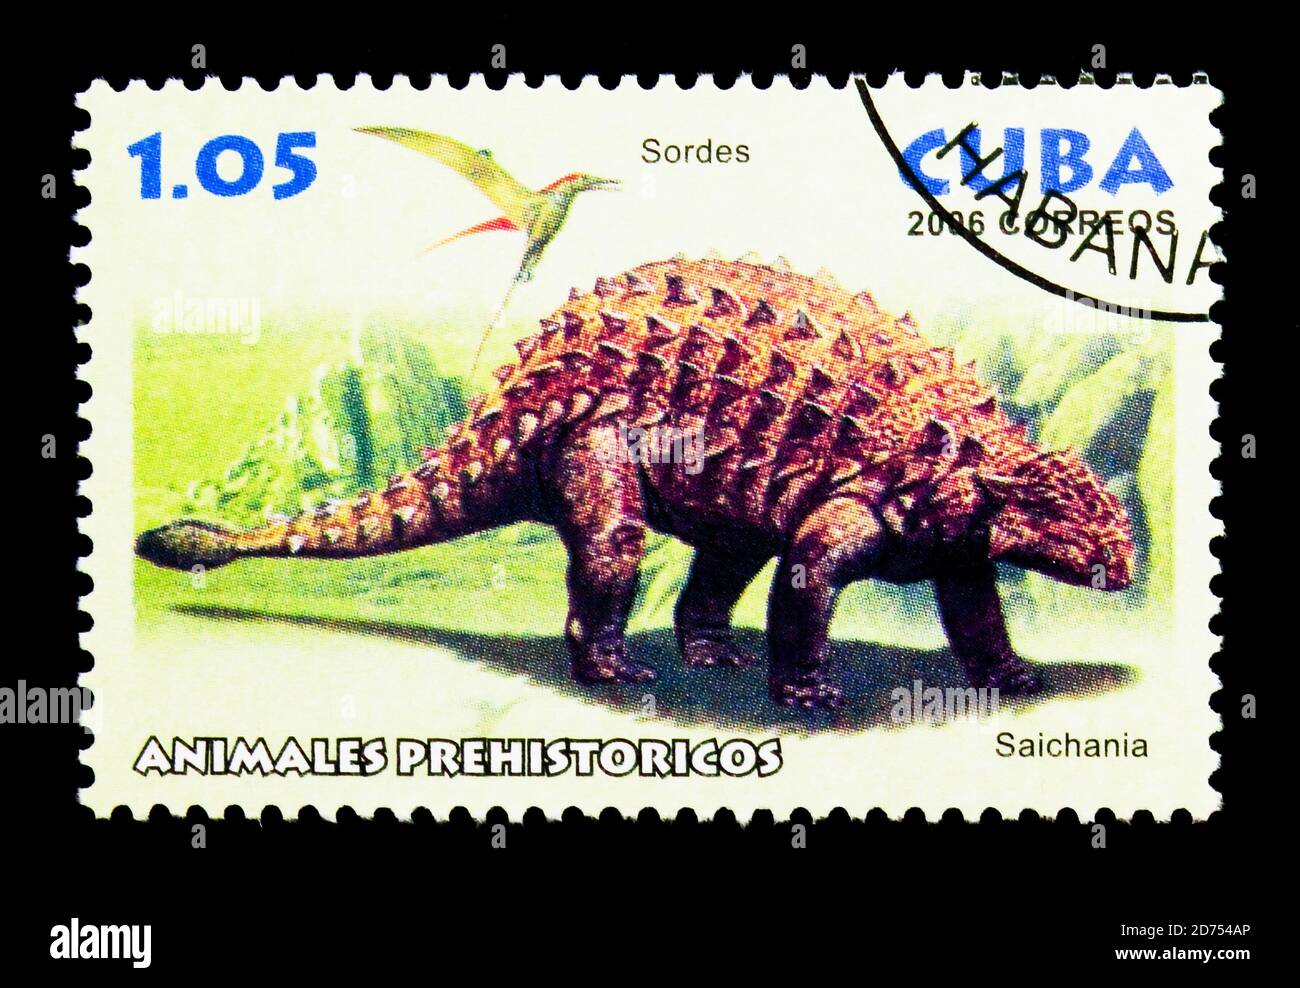 MOSCOW, RUSSIA - NOVEMBER 25, 2017: A stamp printed in Cuba shows Saichania, Sordes, Dinosaurs serie, circa 2006 Stock Photo